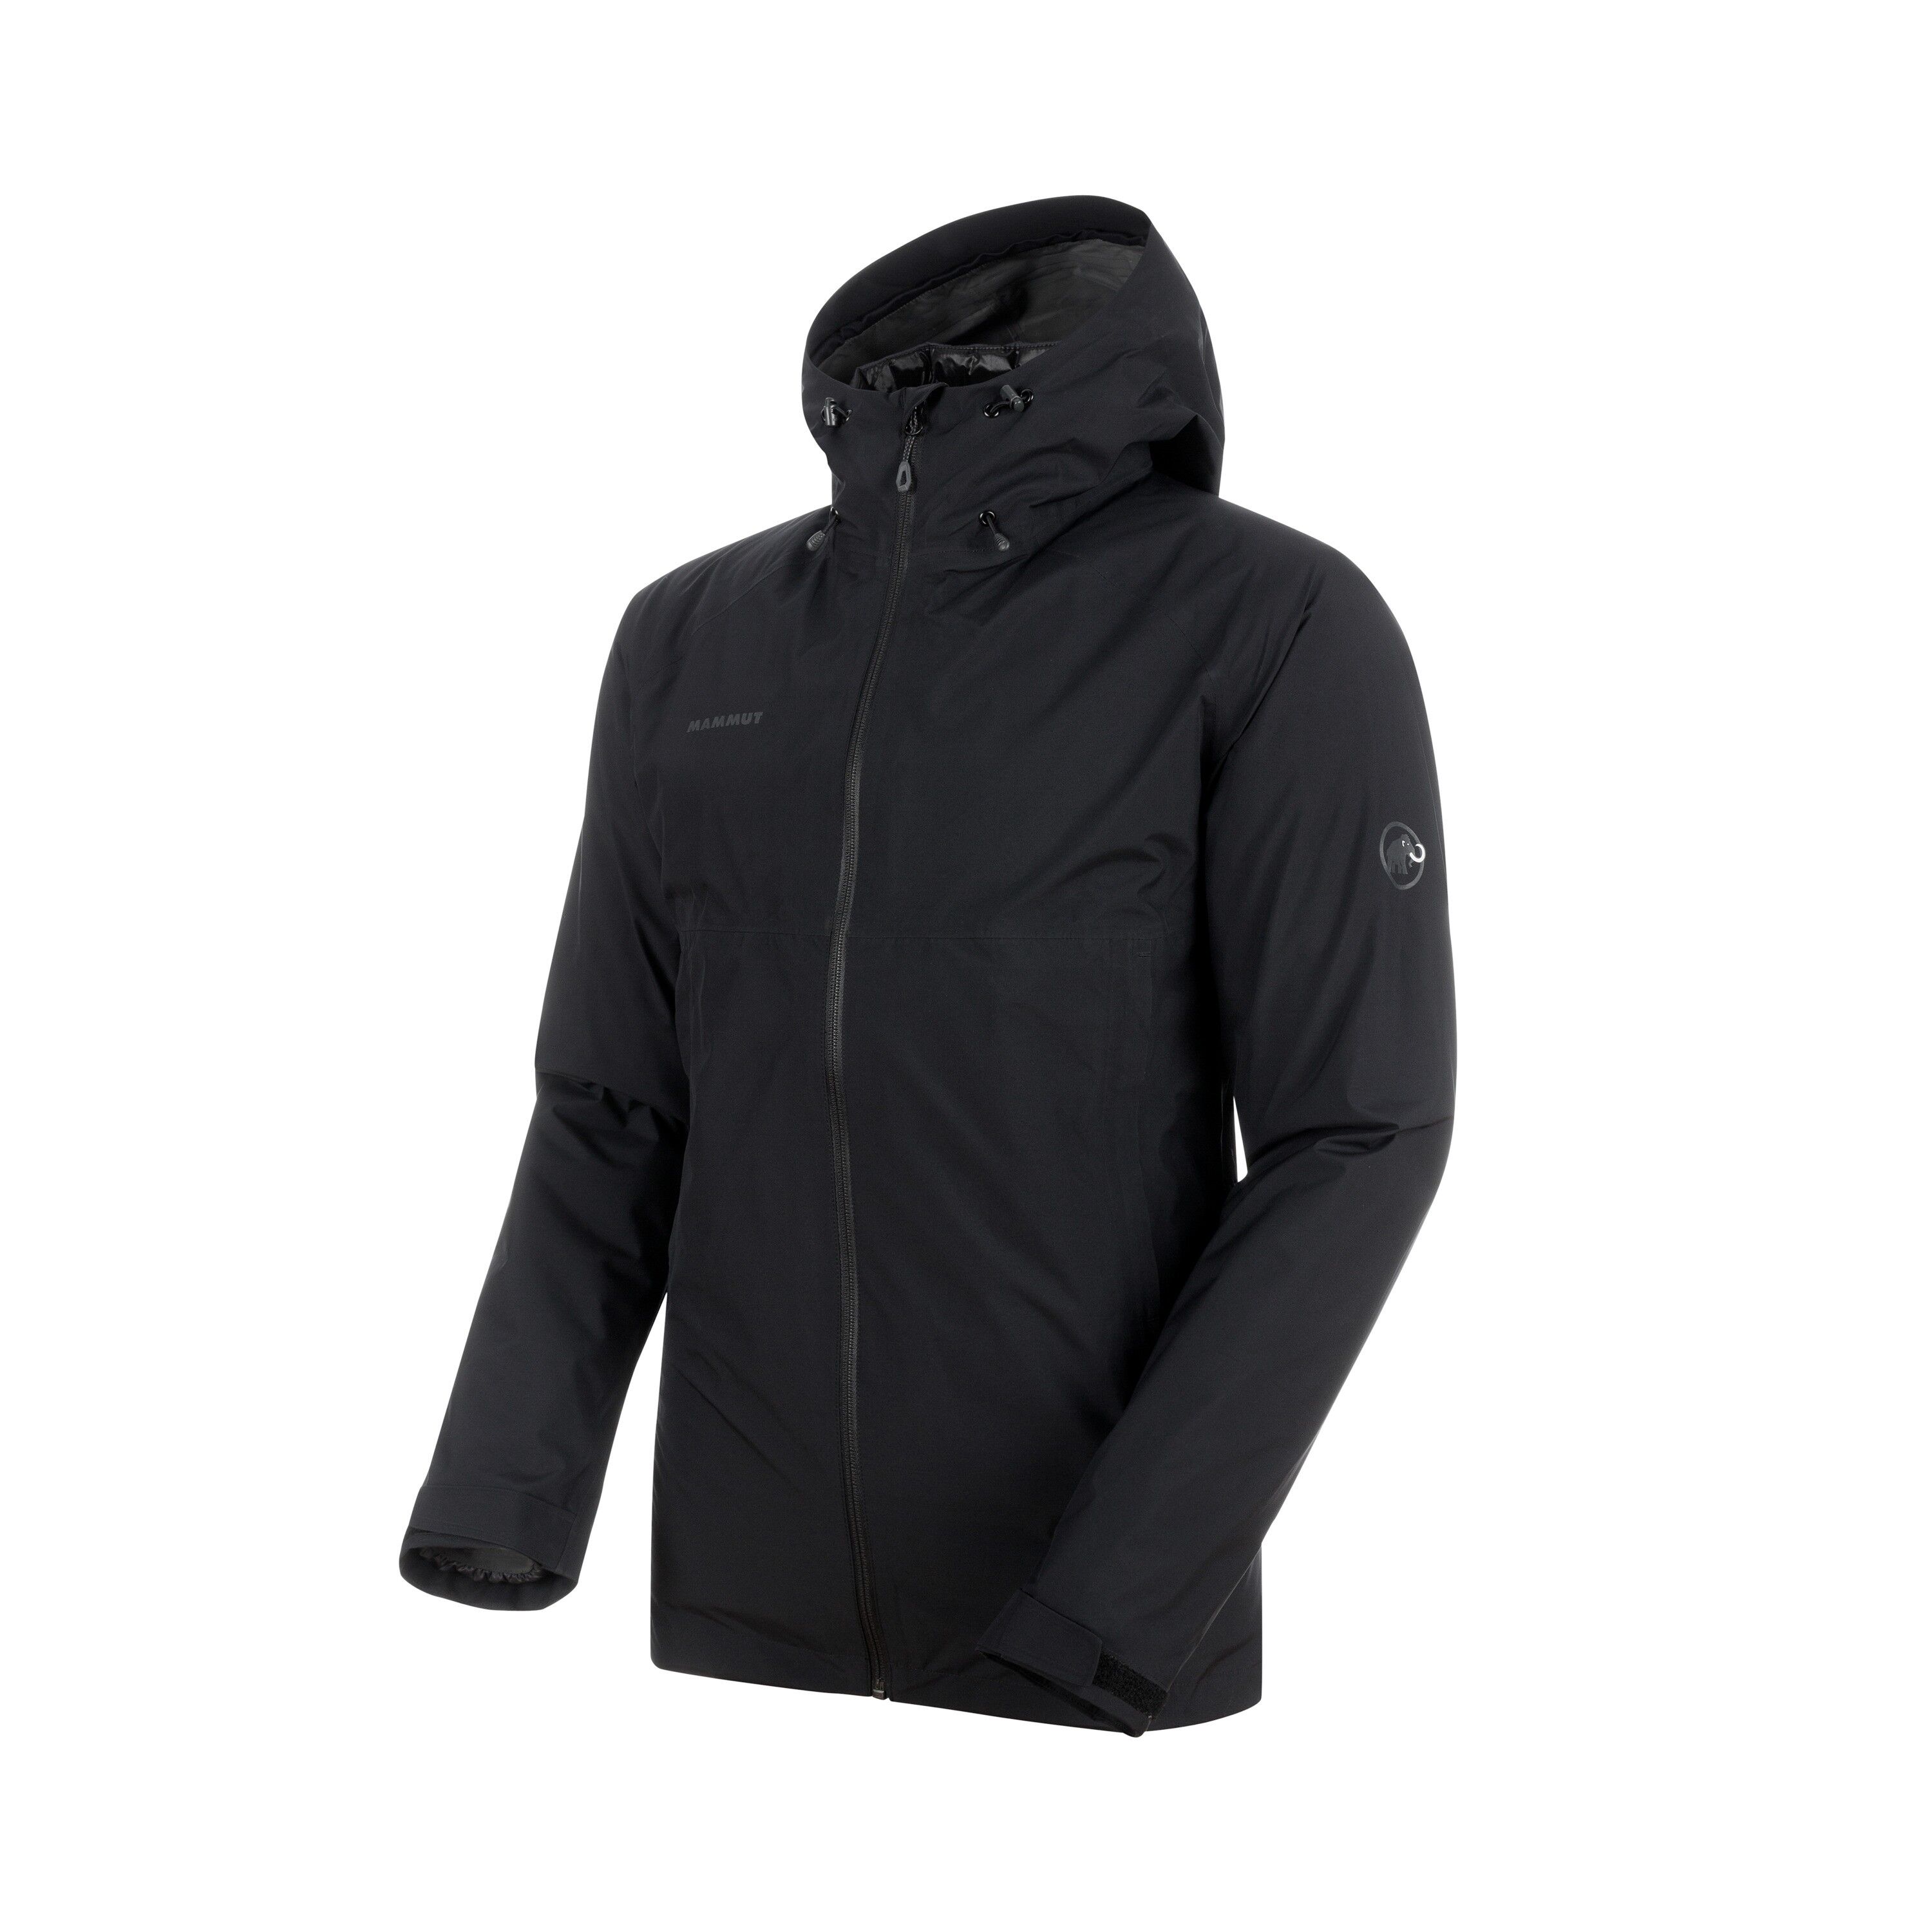 Convey 3 in 1 HS Hooded Jacket - Hardshell jacket - Men's